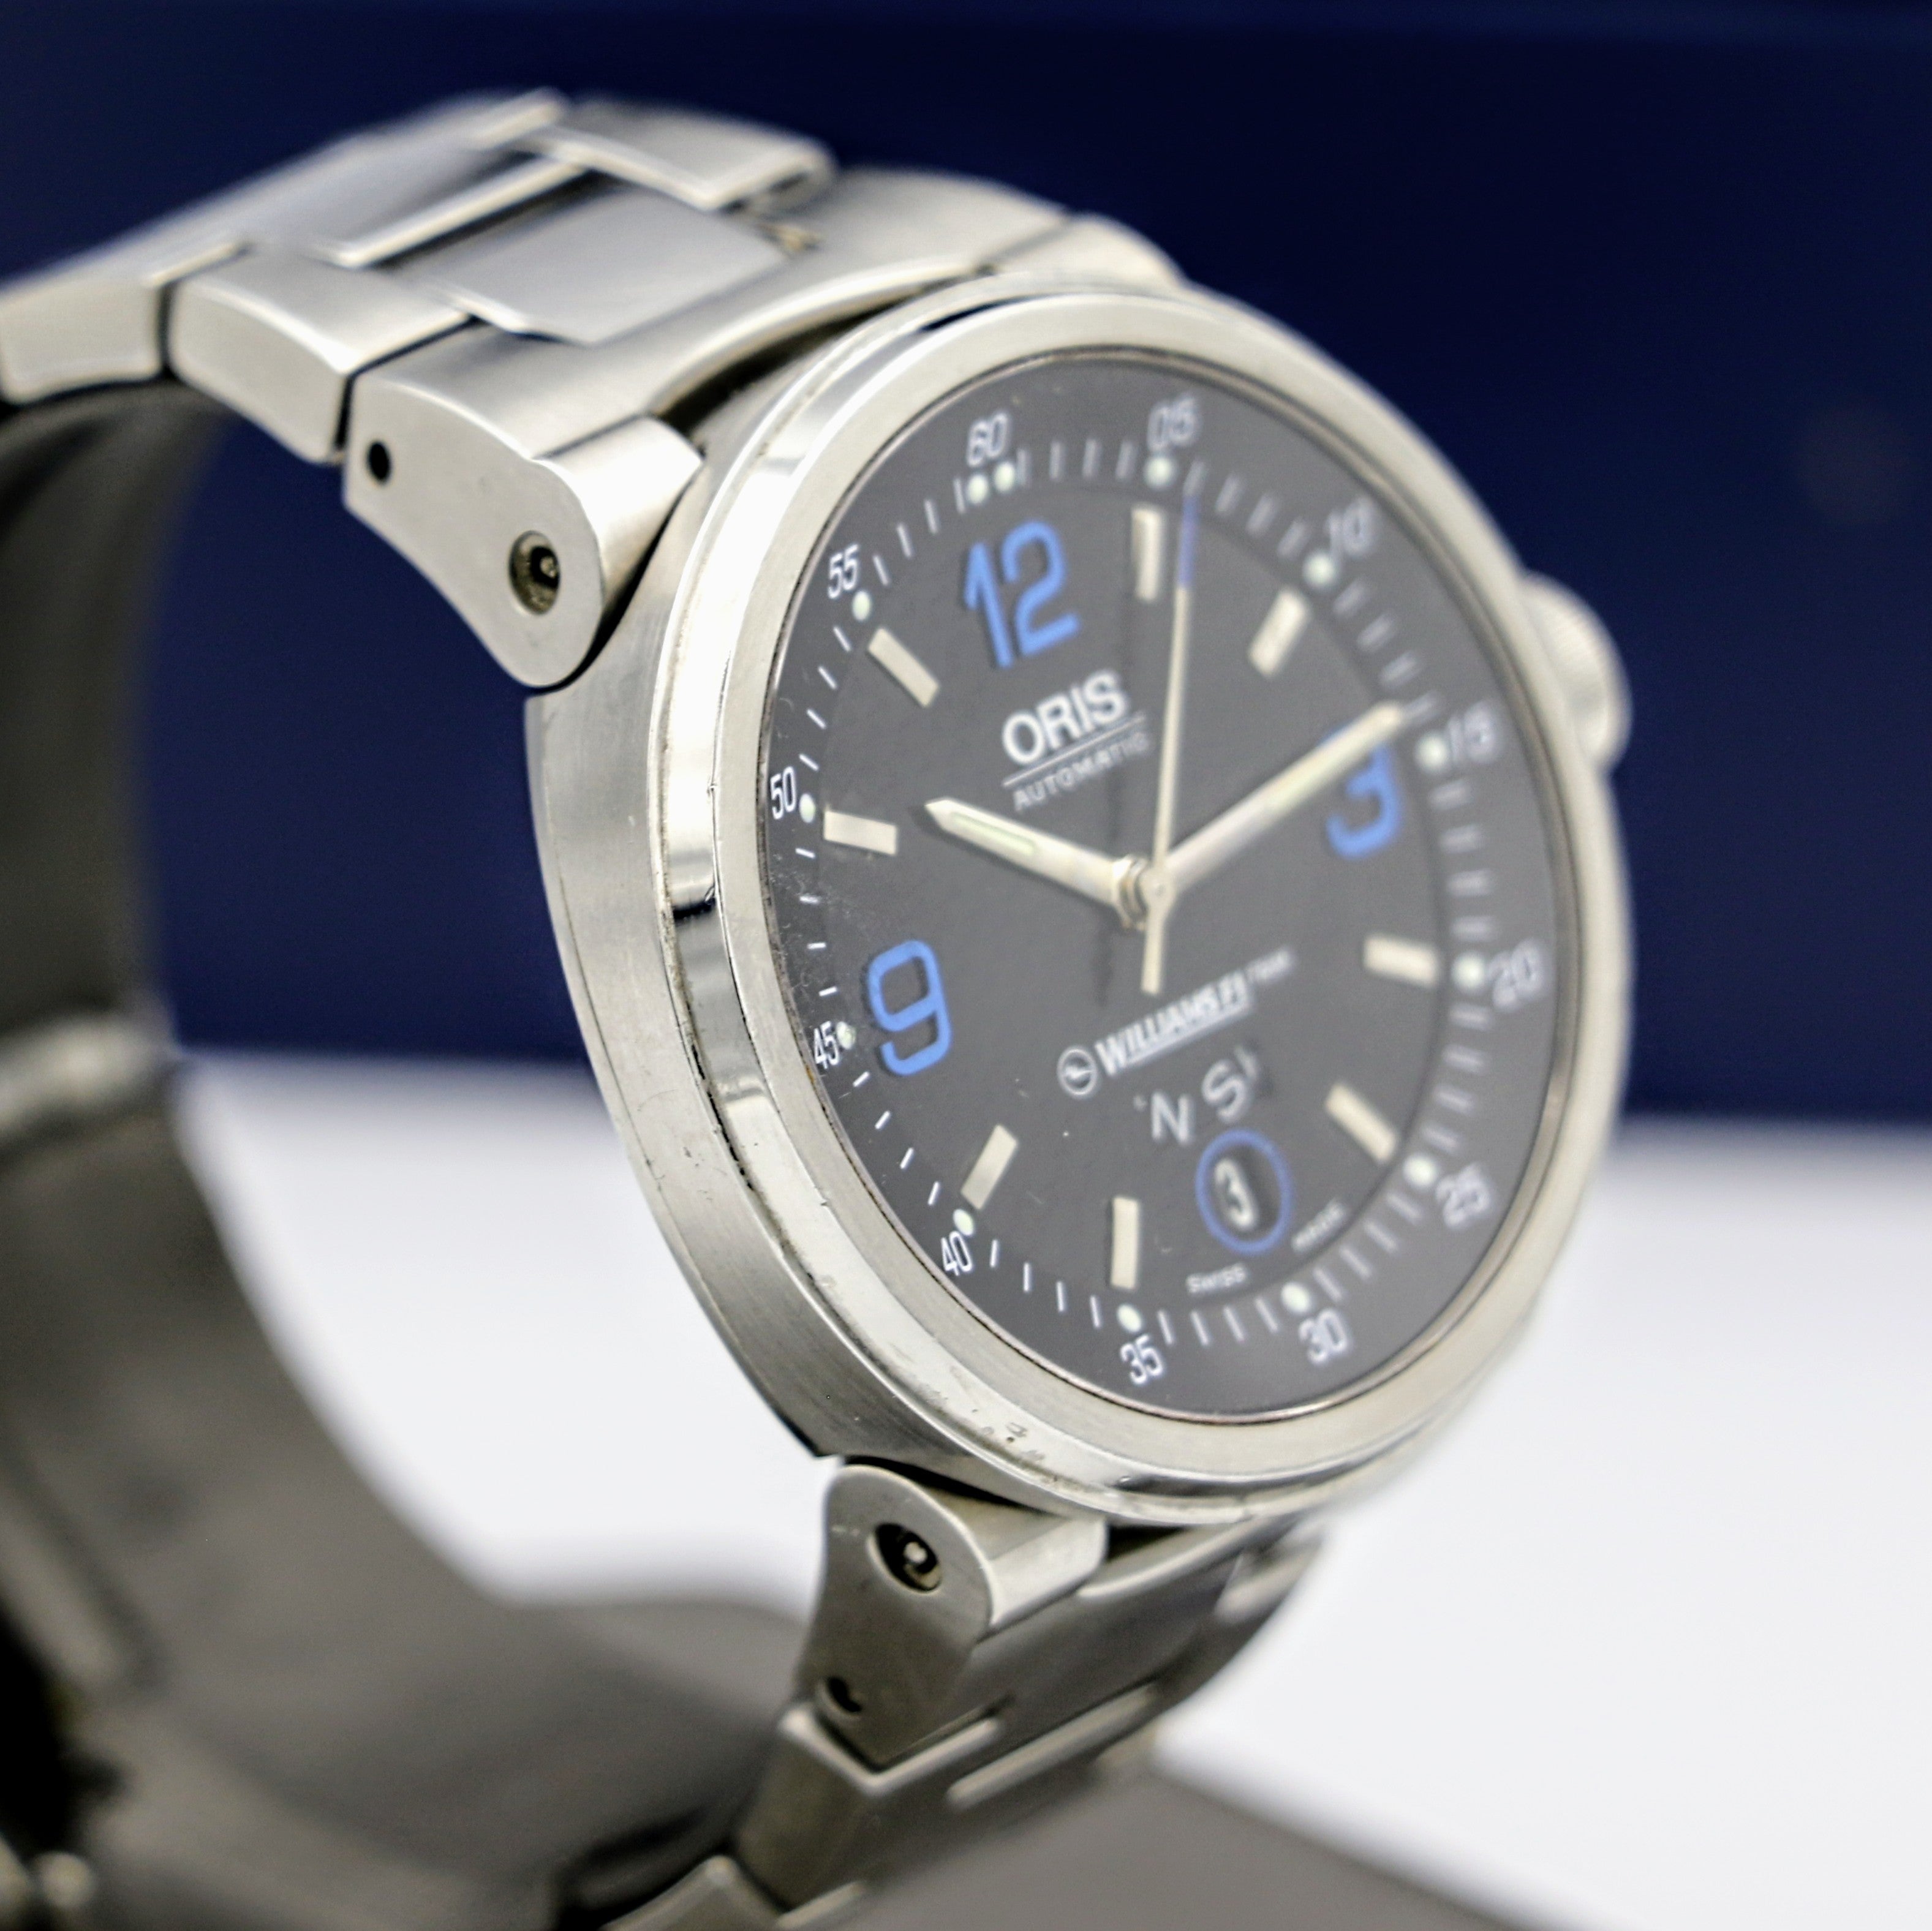 ORIS Williams F1 Team Automatic Day/Date Wristwatch Caliber 635 25 Jewels Watch